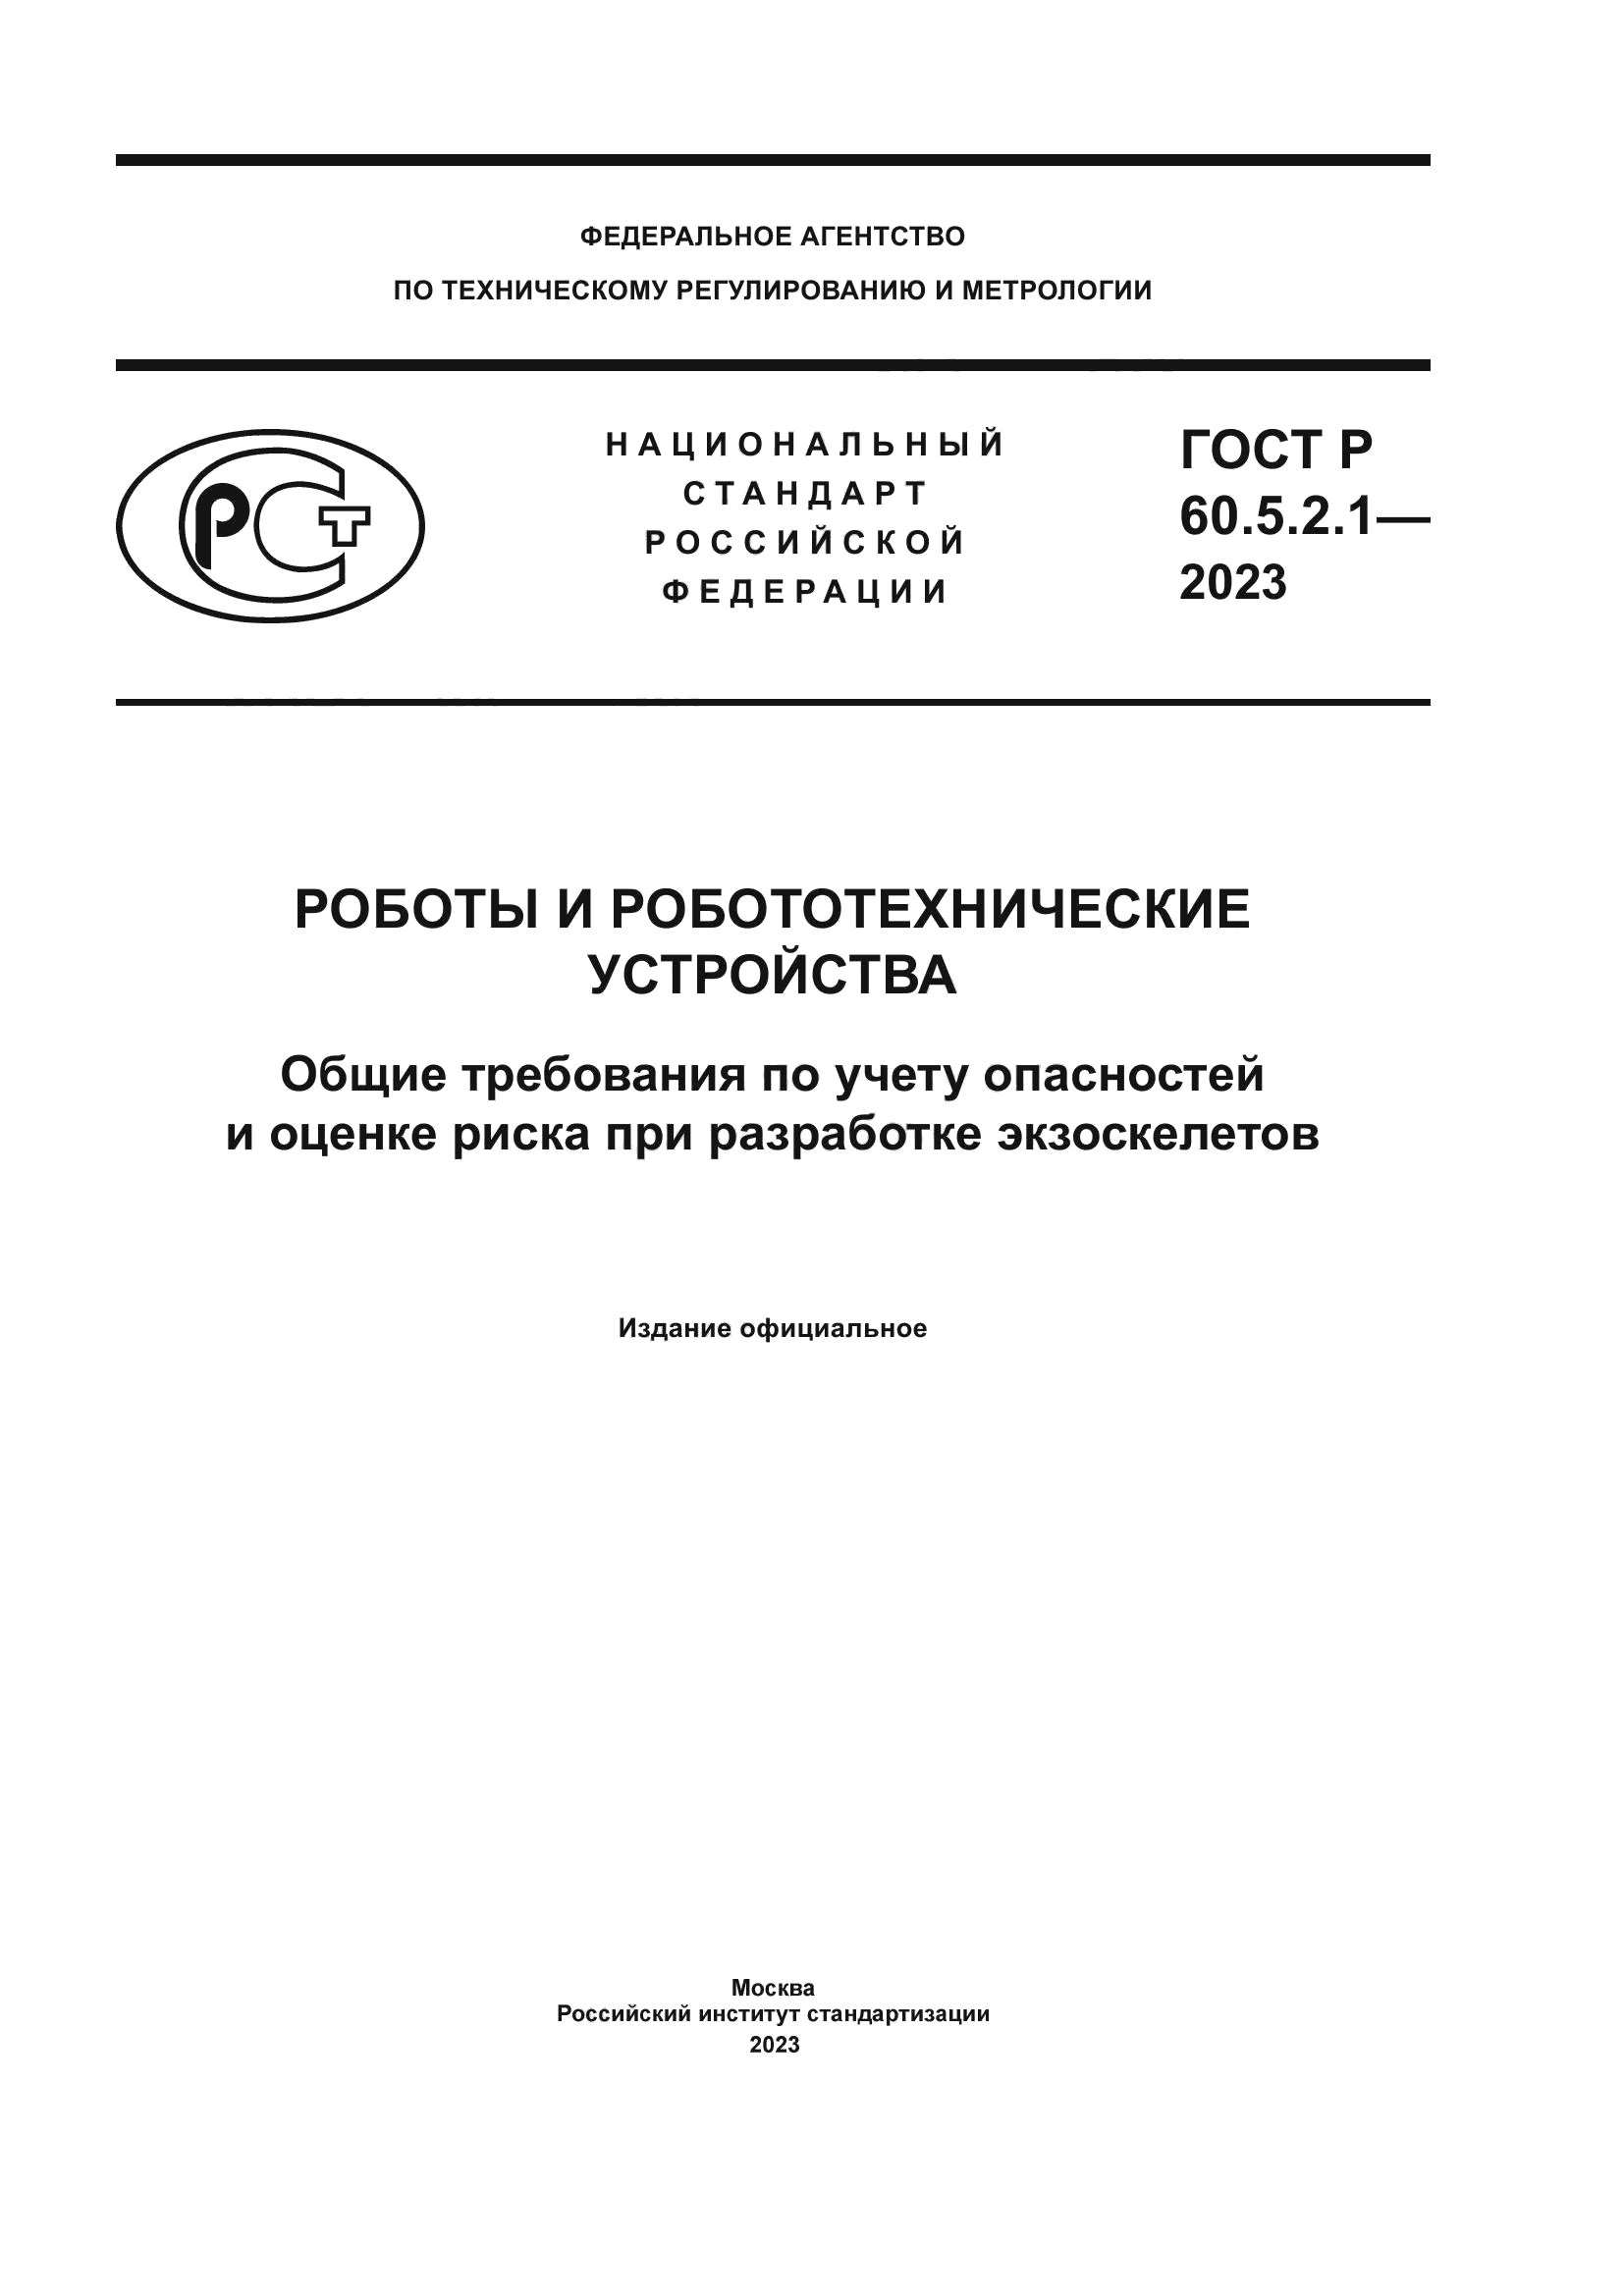 ГОСТ Р 60.5.2.1-2023